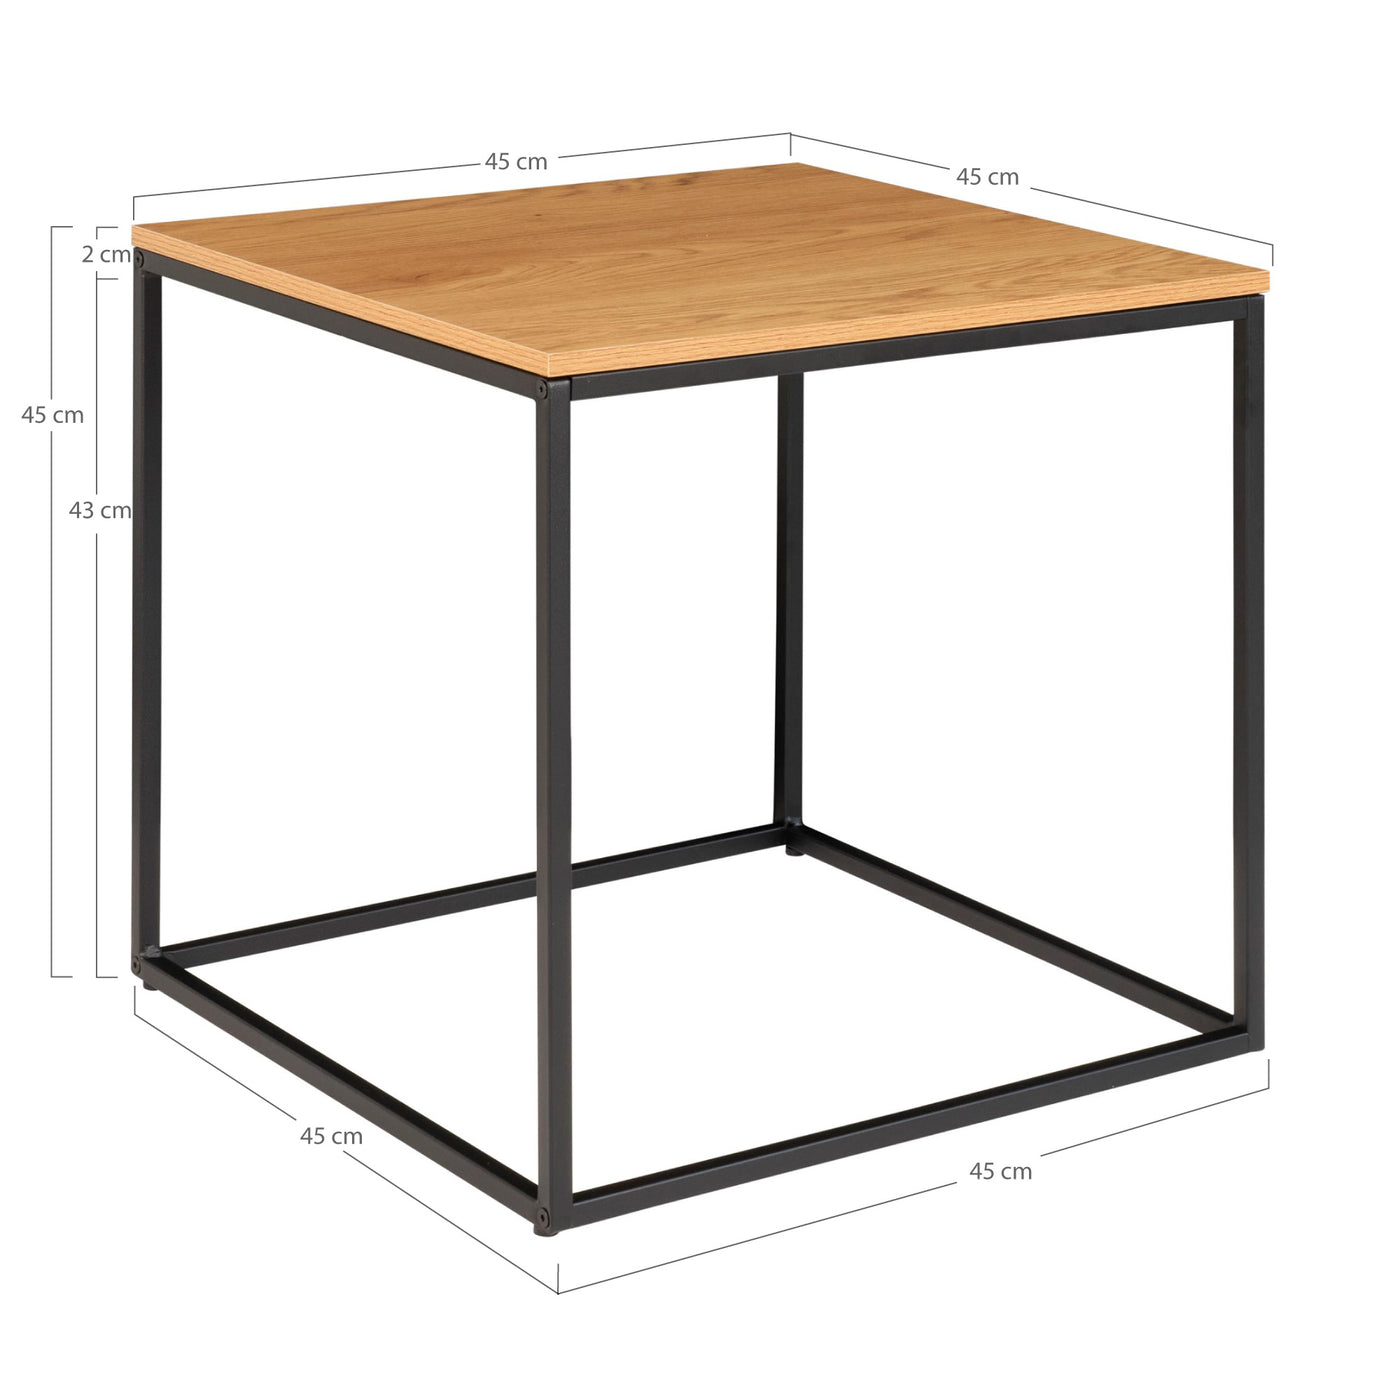 Vita sivupöytä 45 x 45 cm, tammi / musta - Mööpeli.com